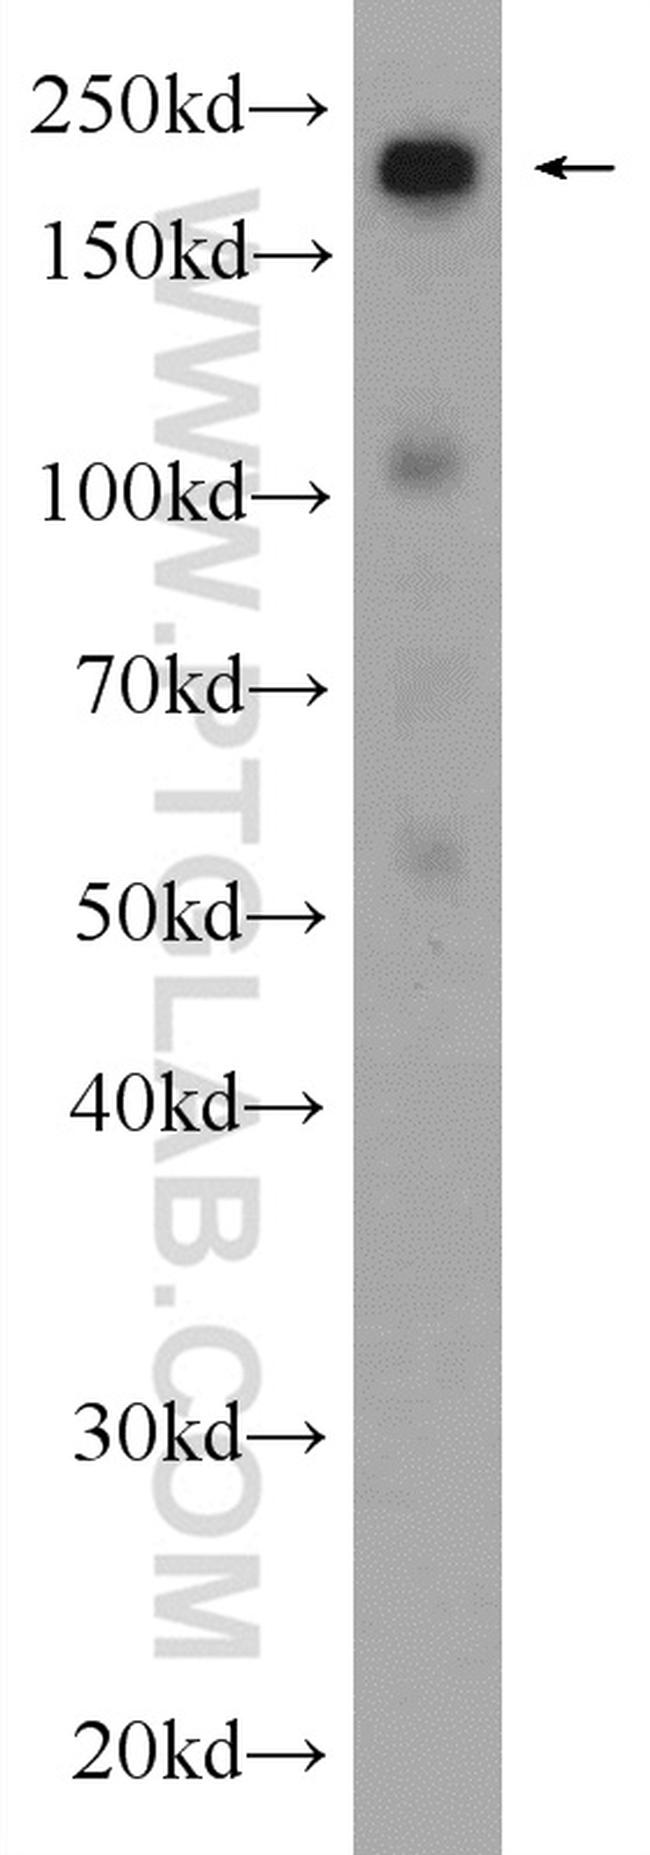 SMARCA4/BRG1 Antibody in Western Blot (WB)